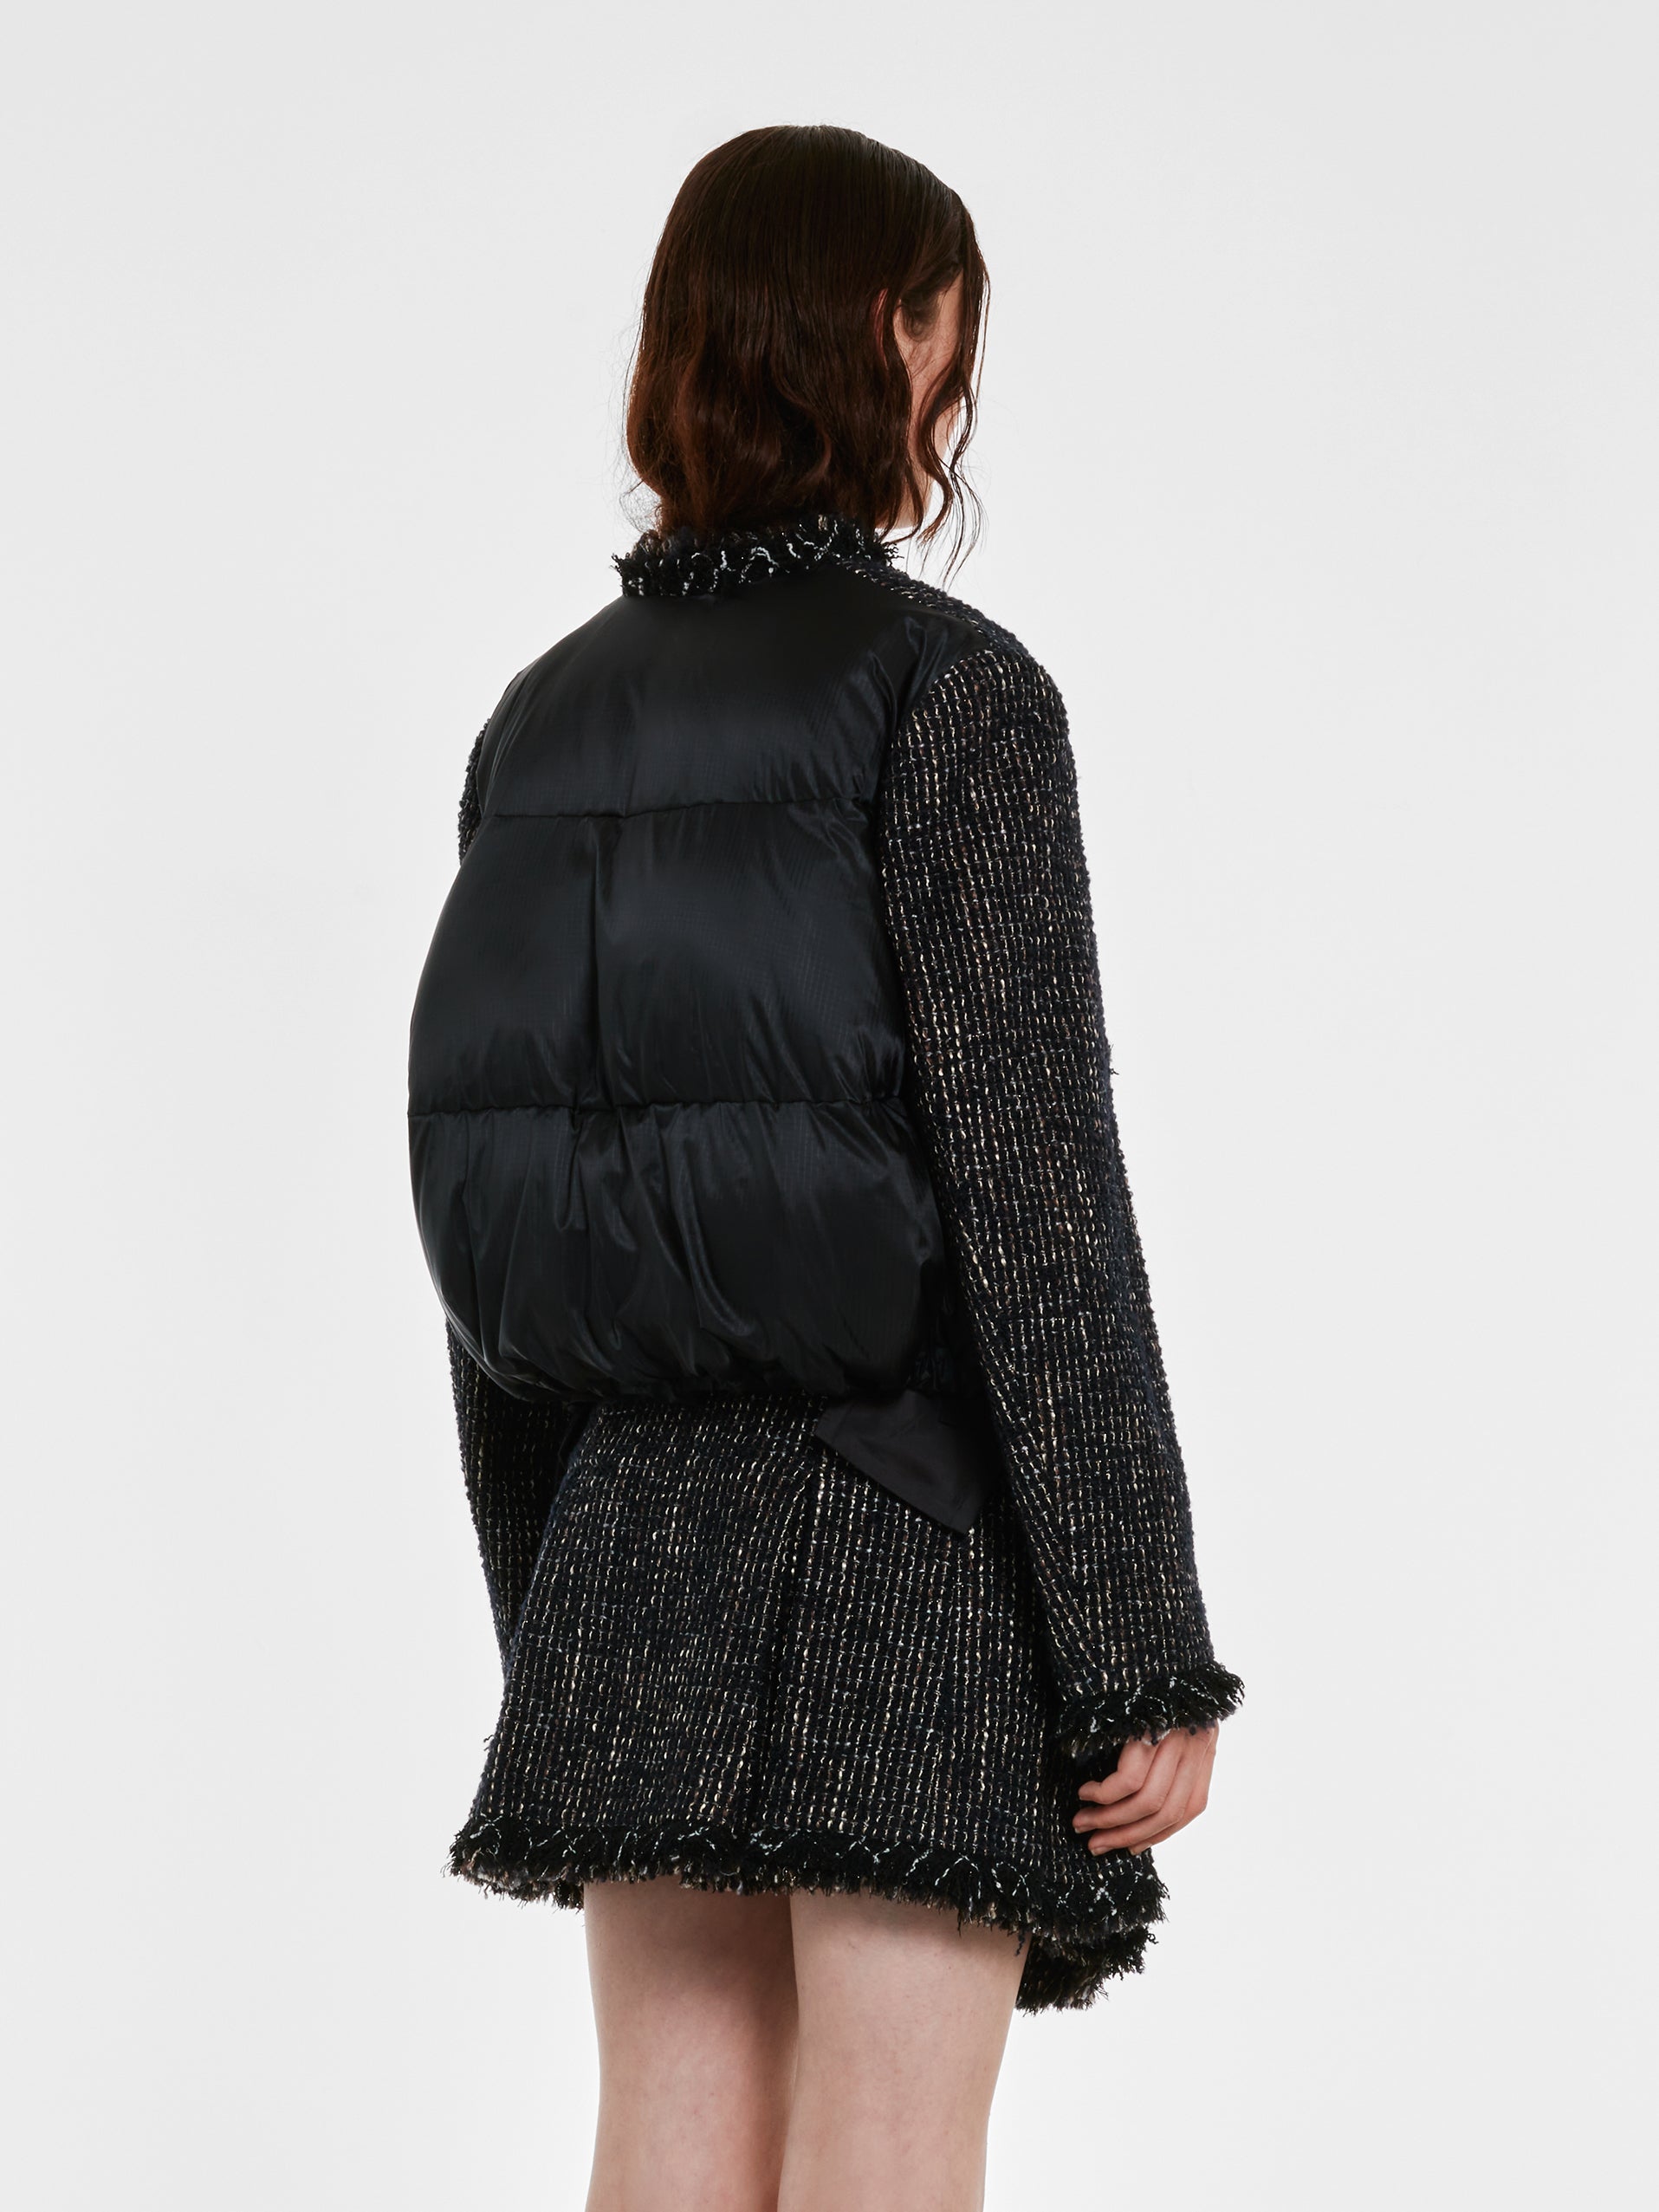 sacai - Women’s Tweed Jacket - (Black) view 3